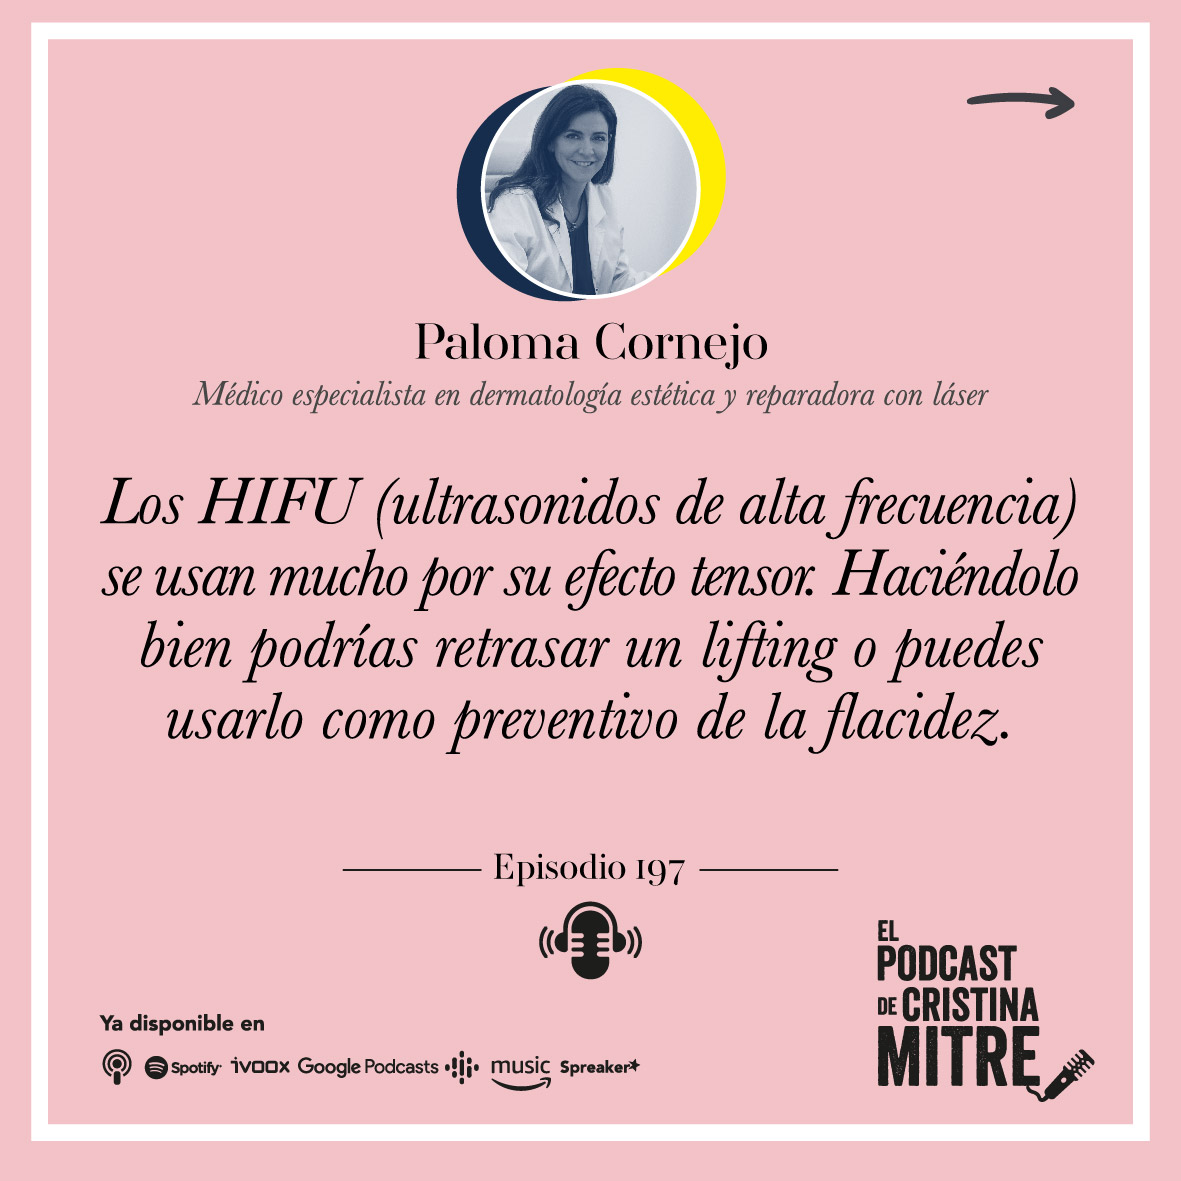 El Podcast de Cristina Mitre Paloma Cornejo HIFU